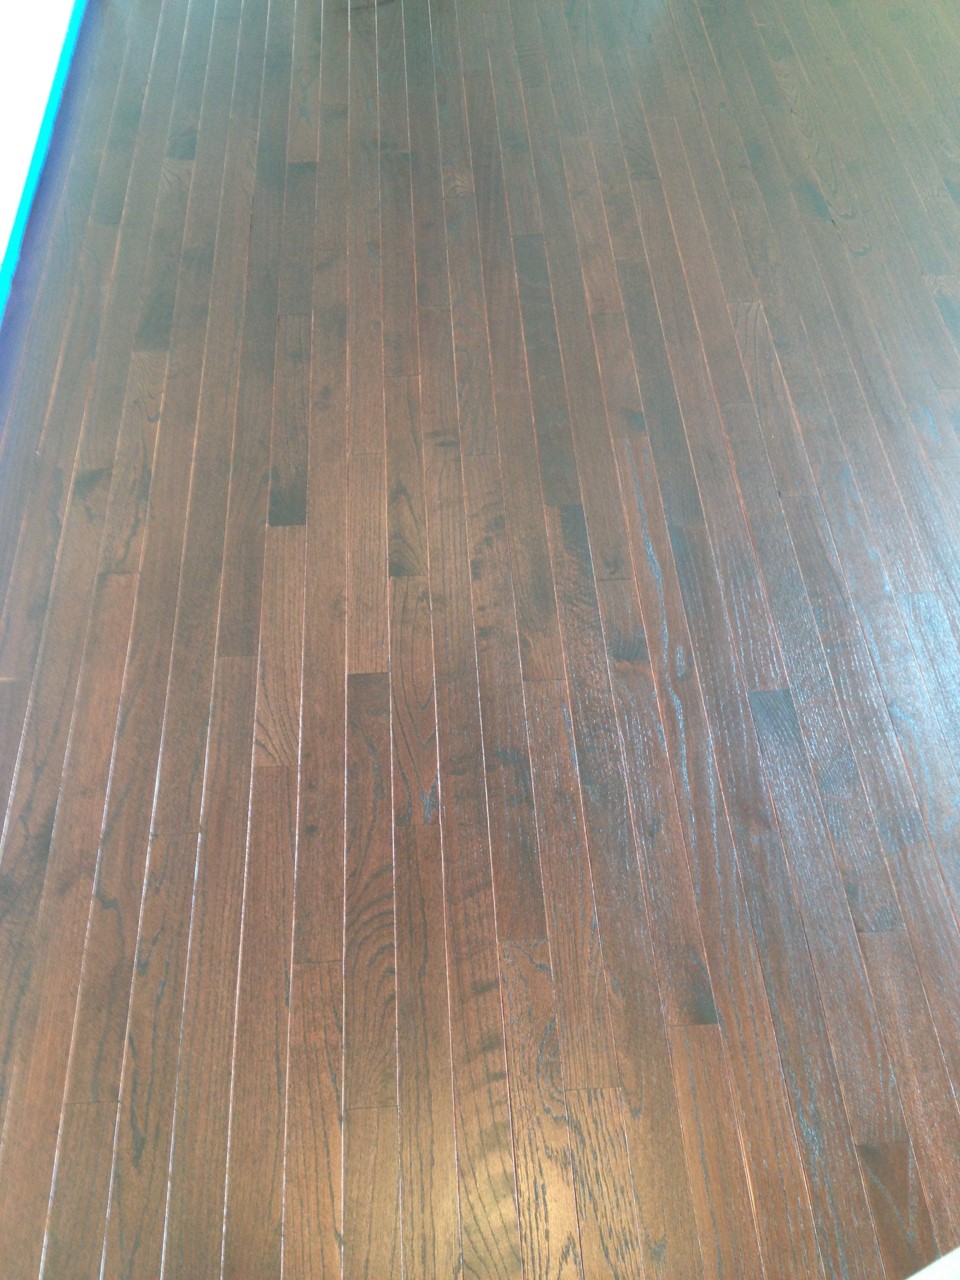 Unfinished Hardwood Flooring, Can You Walk On Unfinished Hardwood Floors